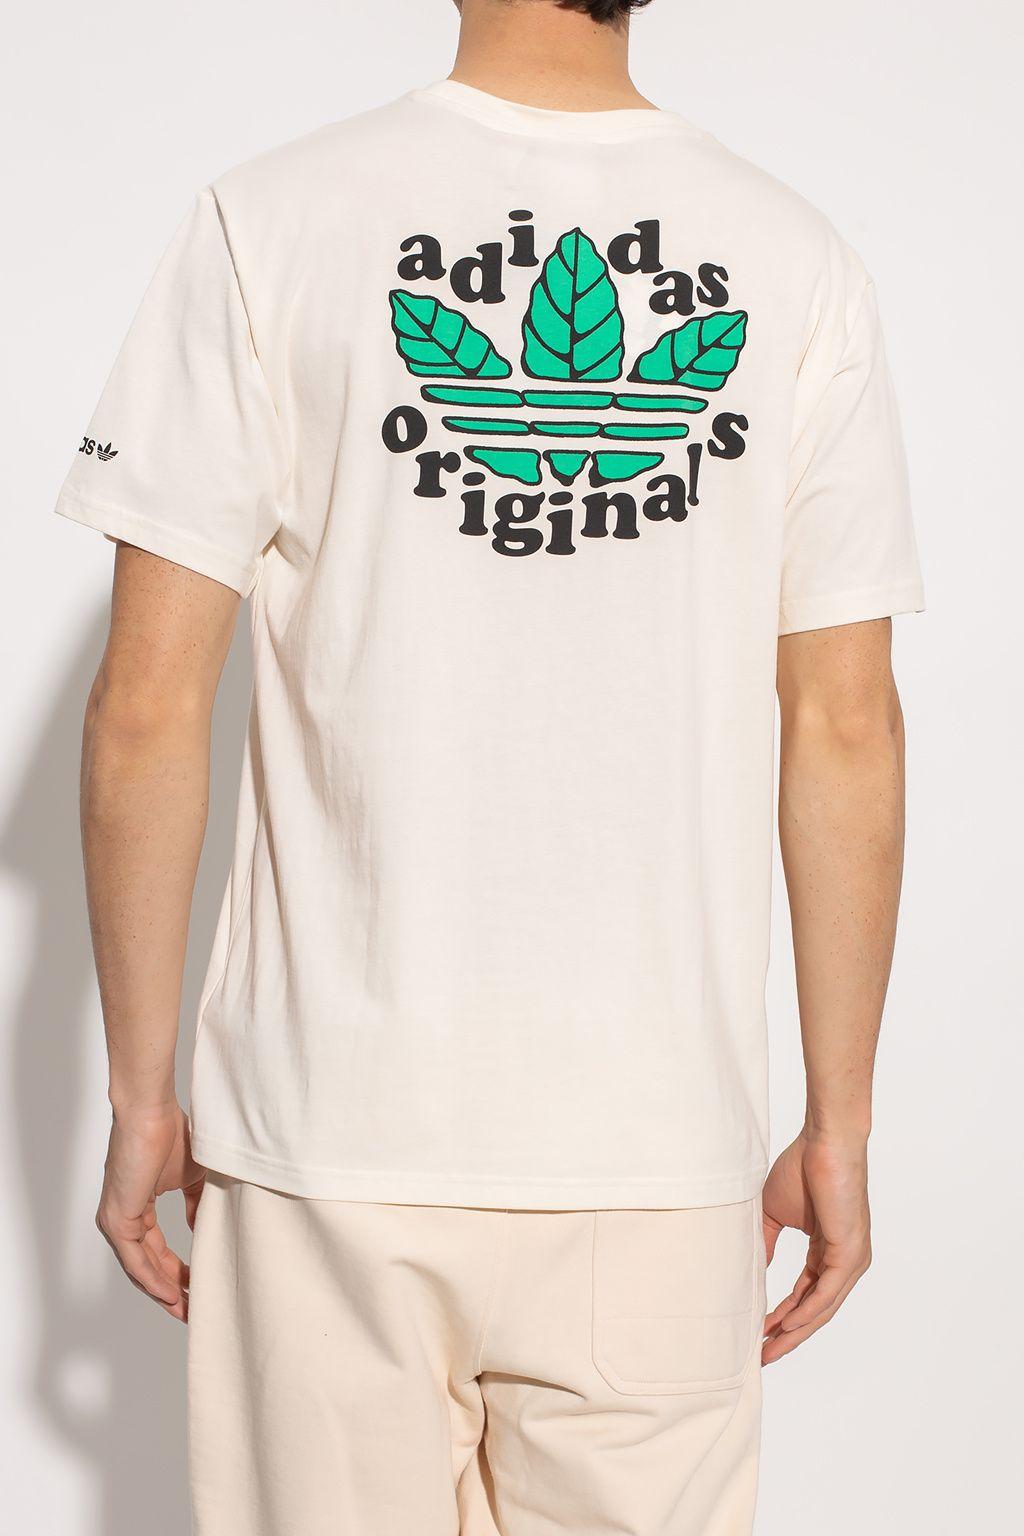 adidas T-shirt Originals | Logo Lyst for Men Natural in